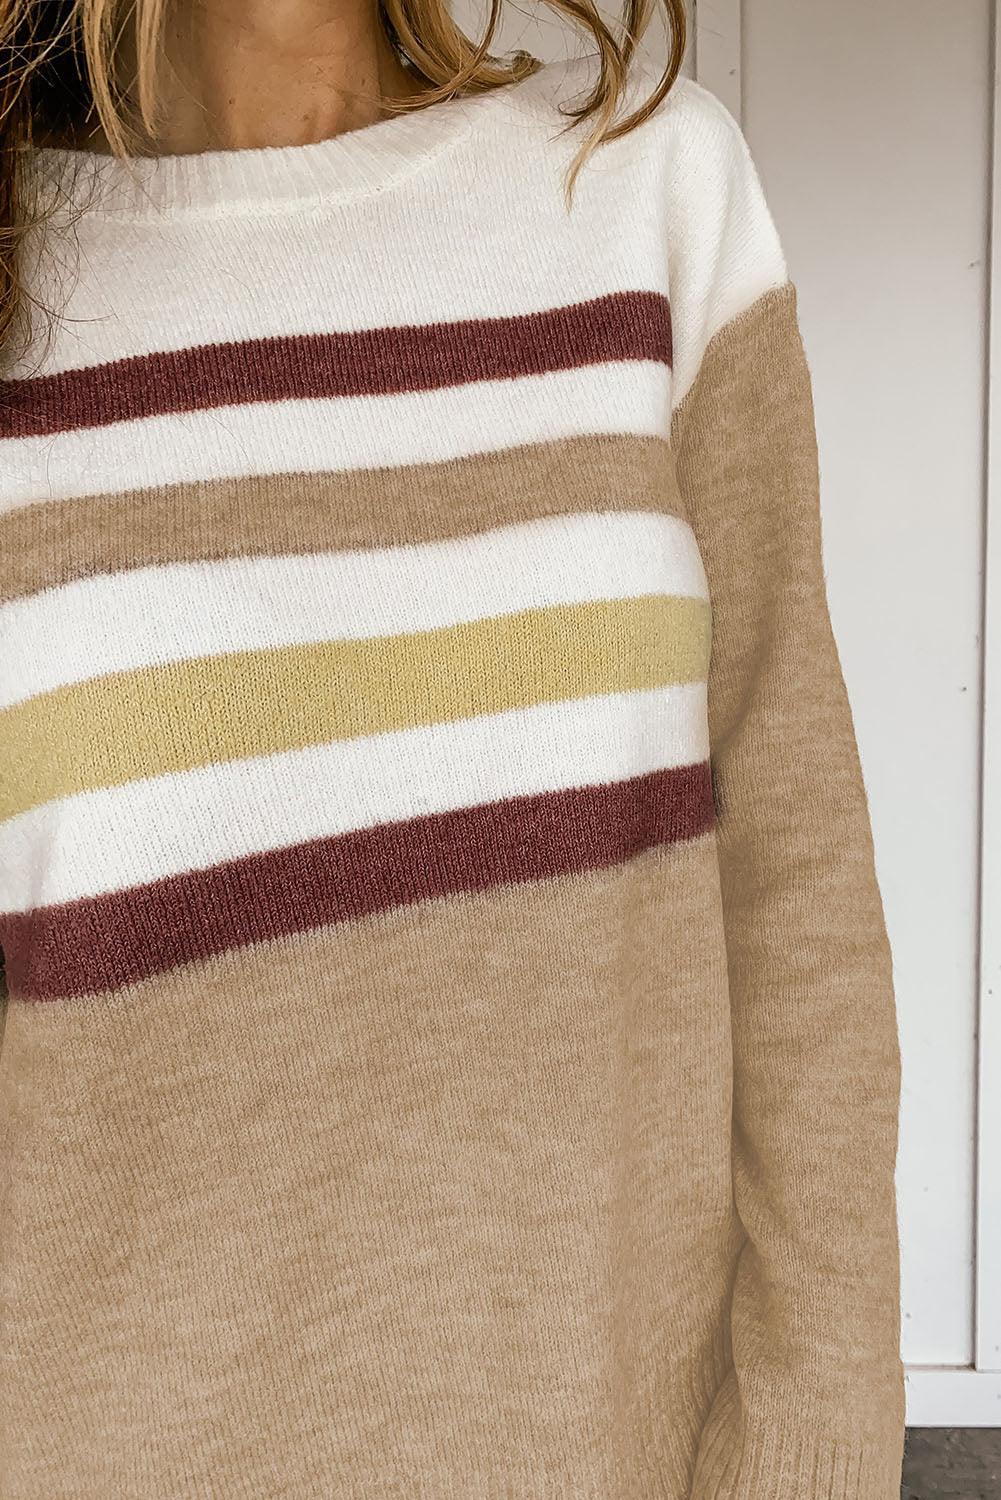 Khaki Crew Neck Striped Long Sleeve Sweater - L & M Kee, LLC